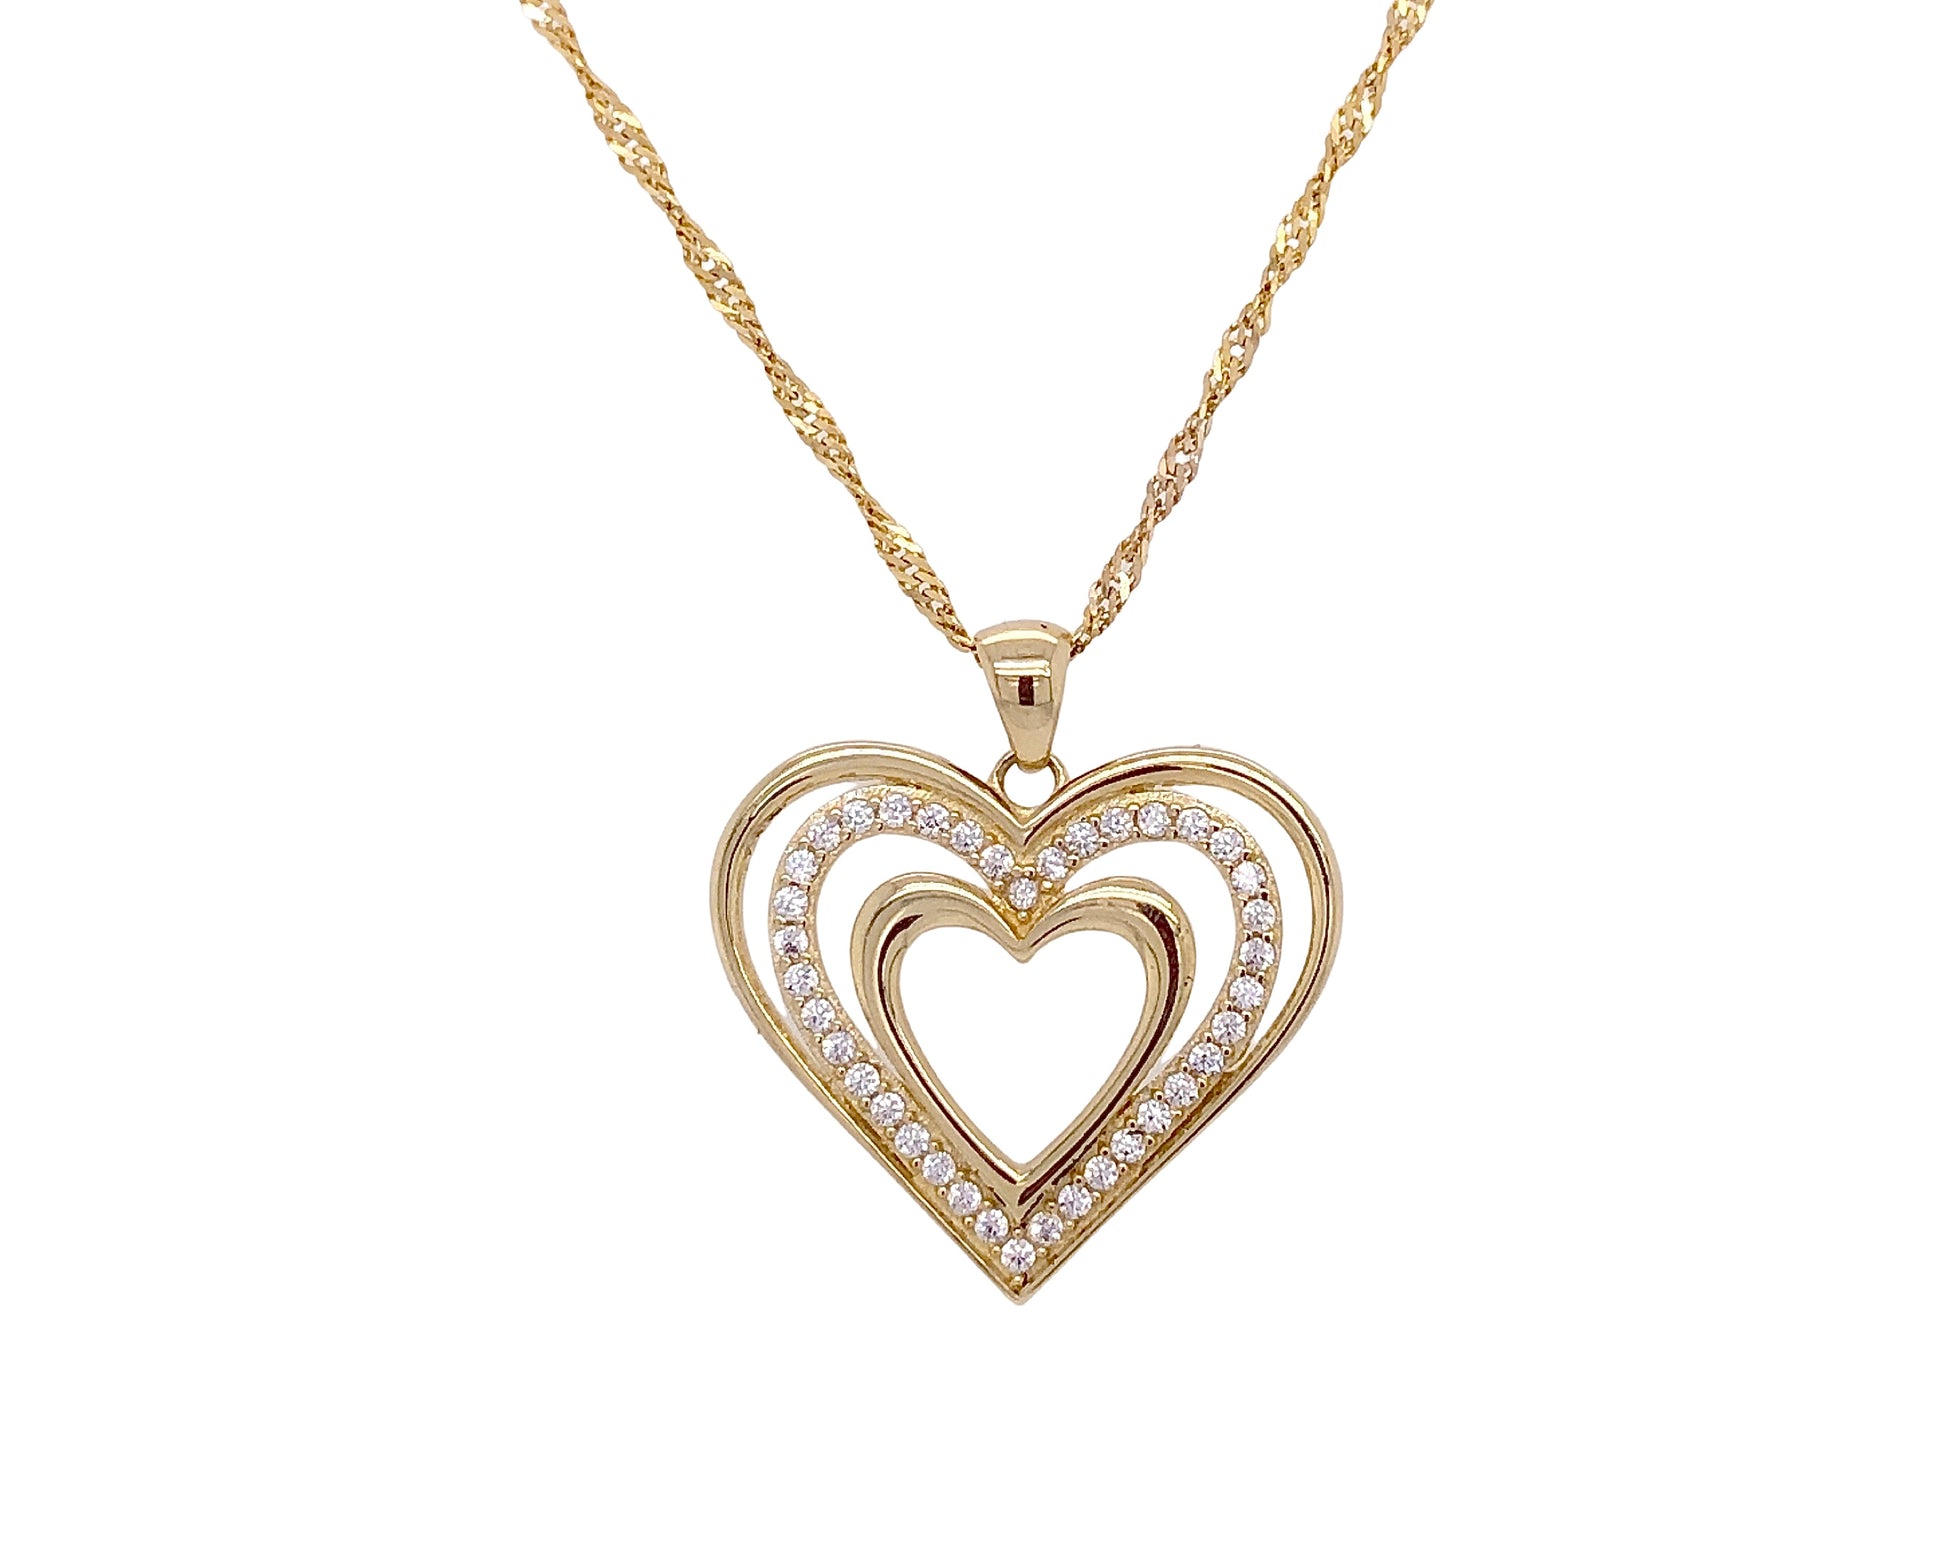 cz heart pendant with chain - women's jewelry 